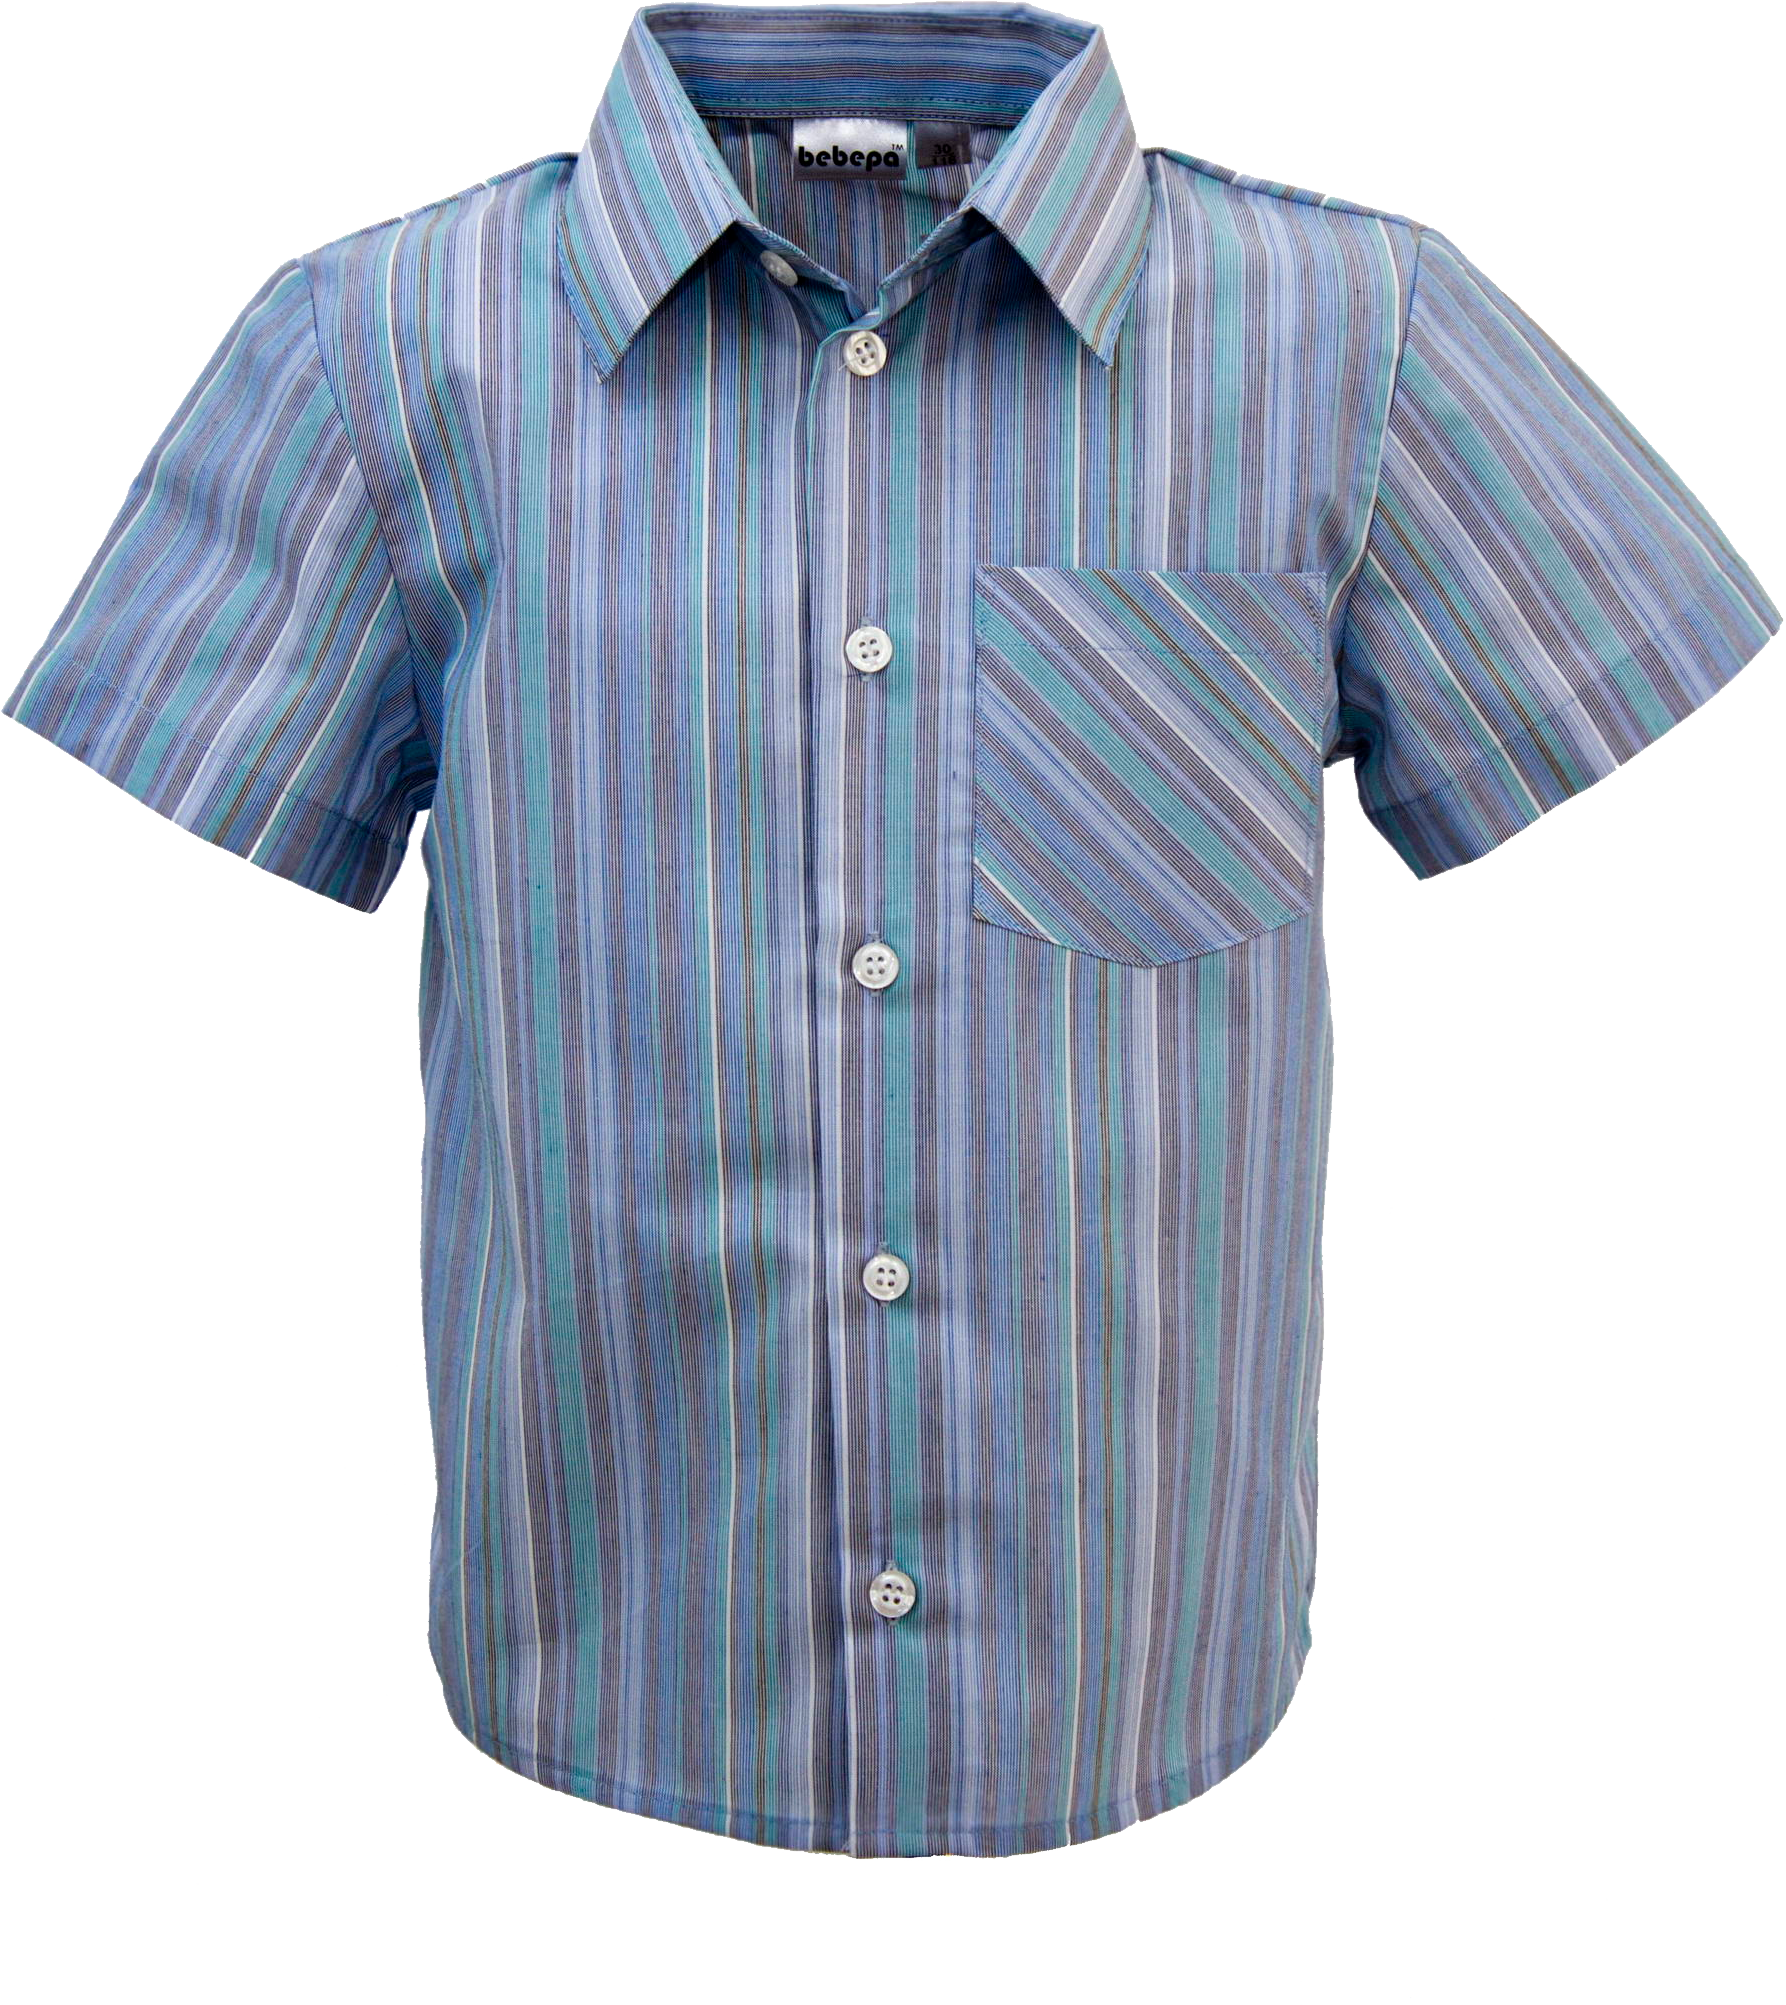 Download PNG image - Dress Shirt PNG Image HD 